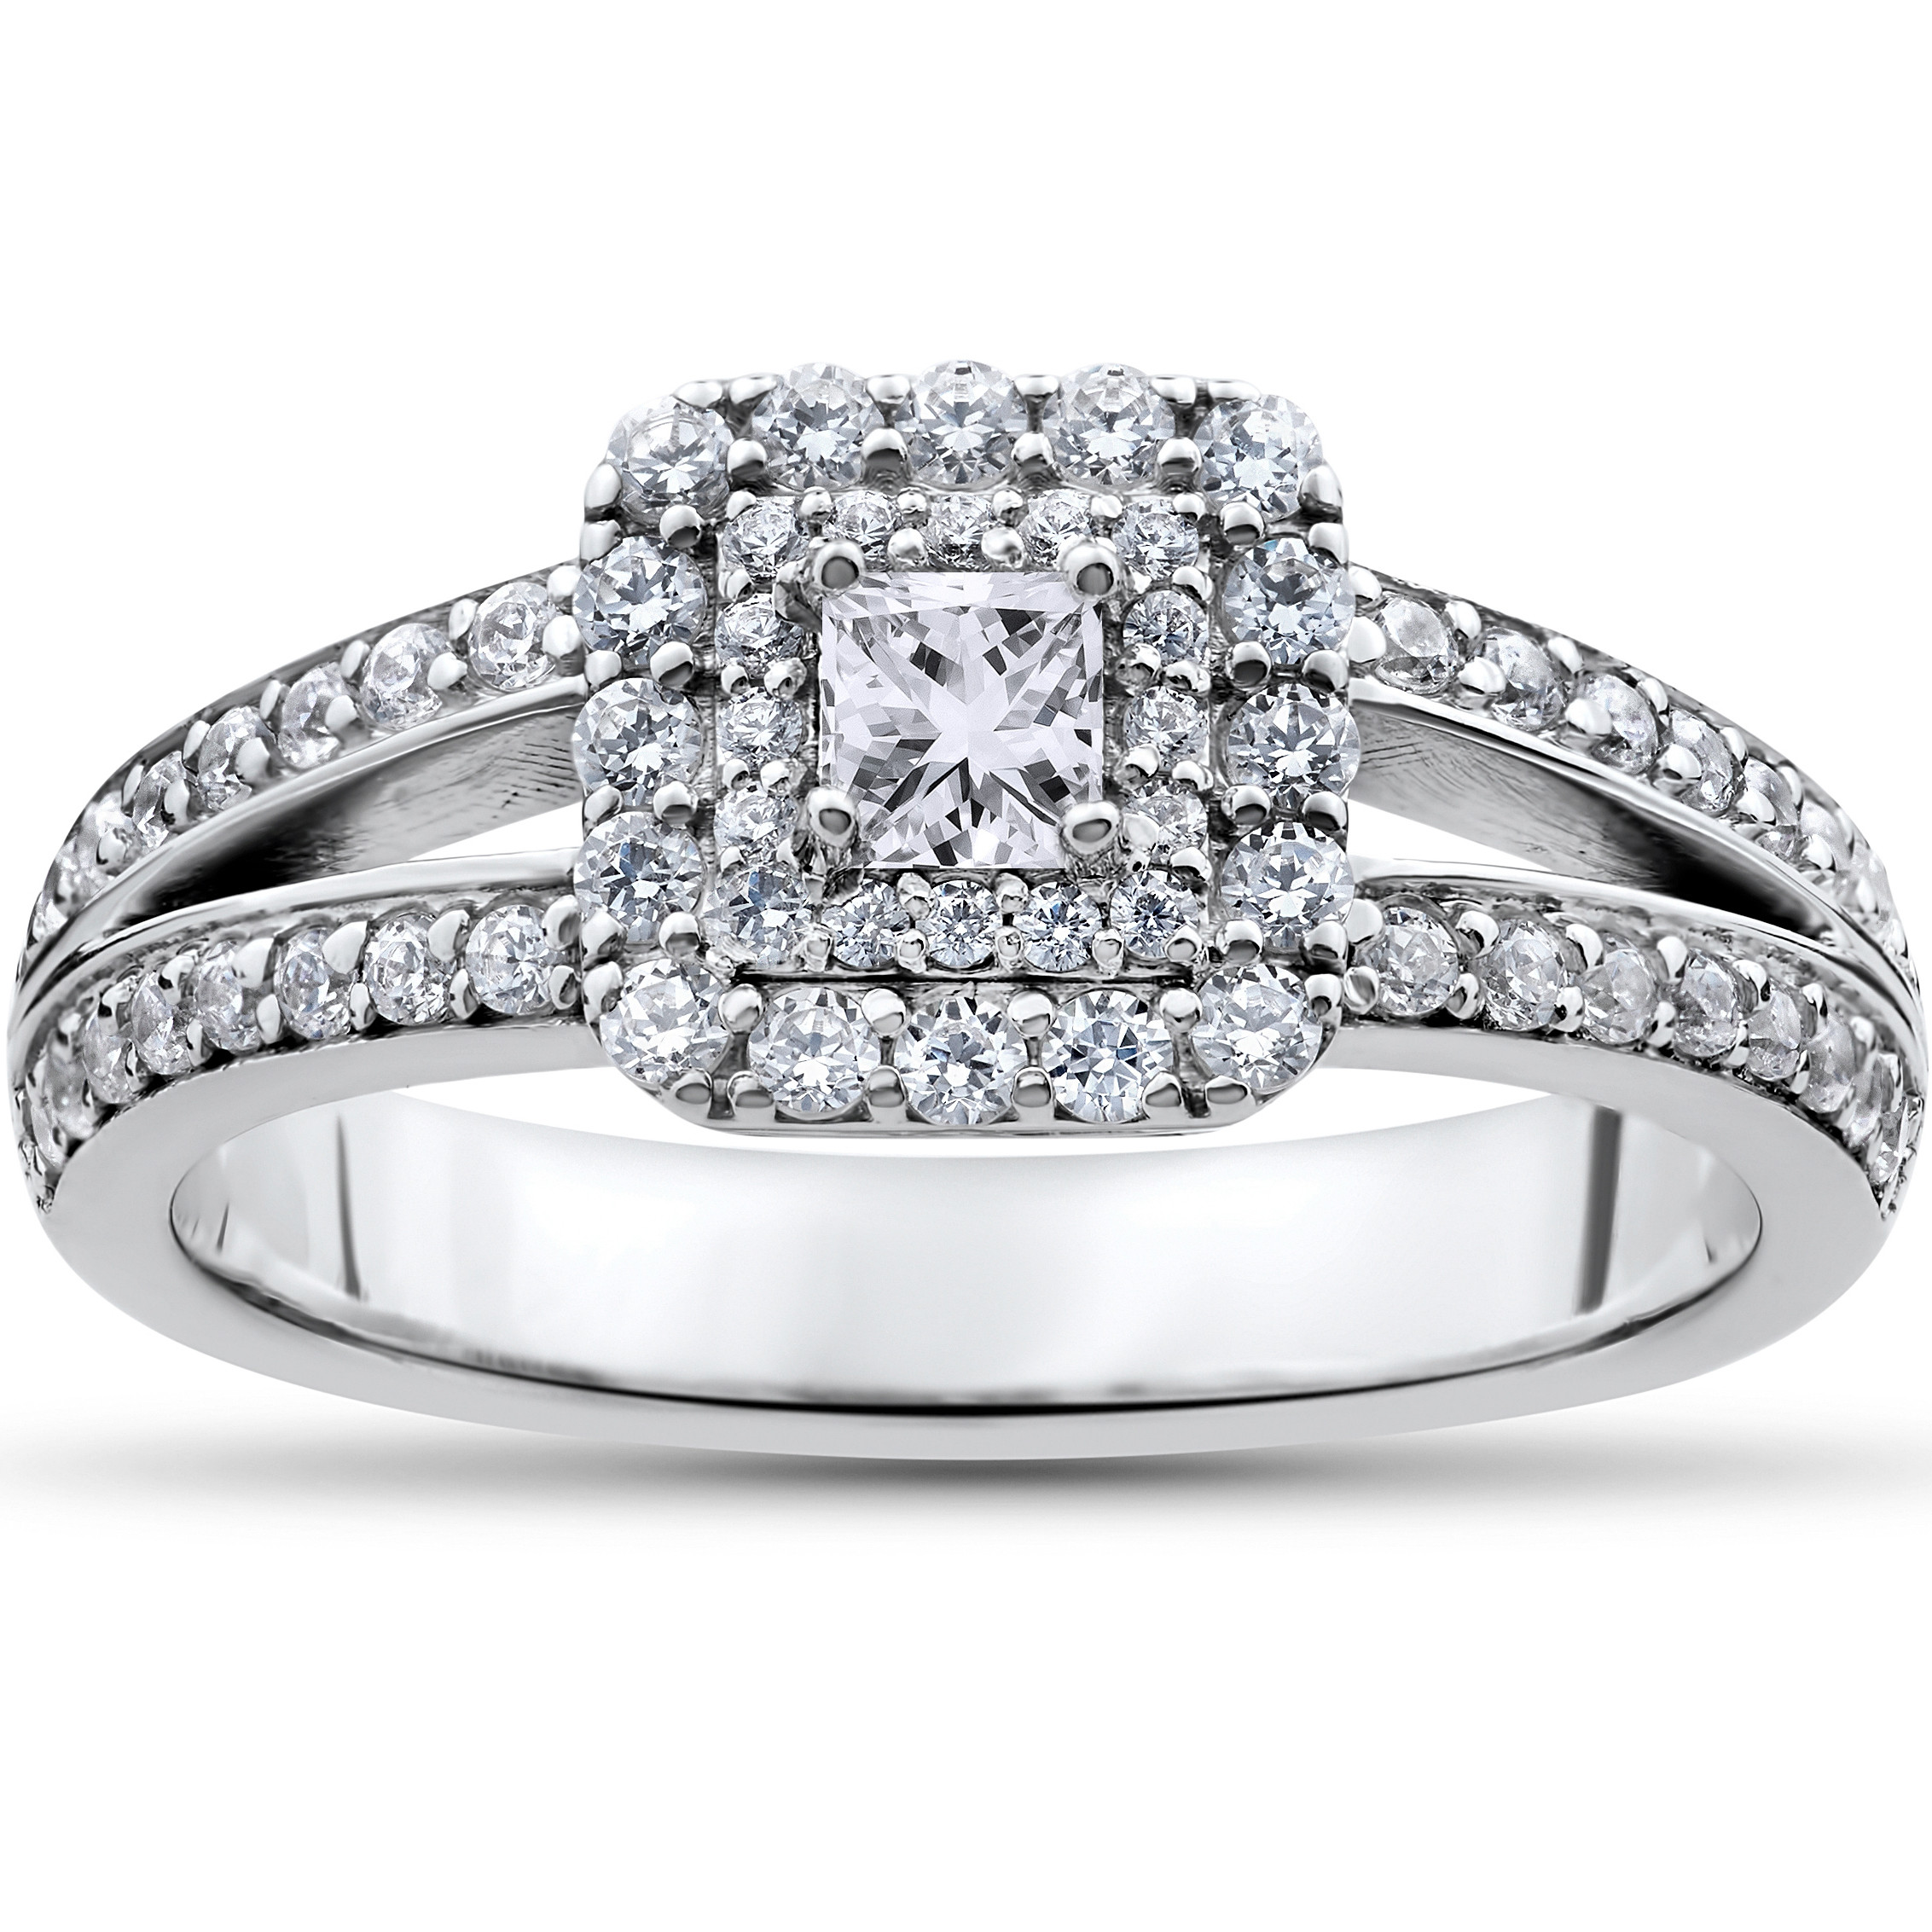 Princess Cut White Gold Engagement Ring
 1 ct Princess Cut Diamond Double Halo Engagement Ring 14k